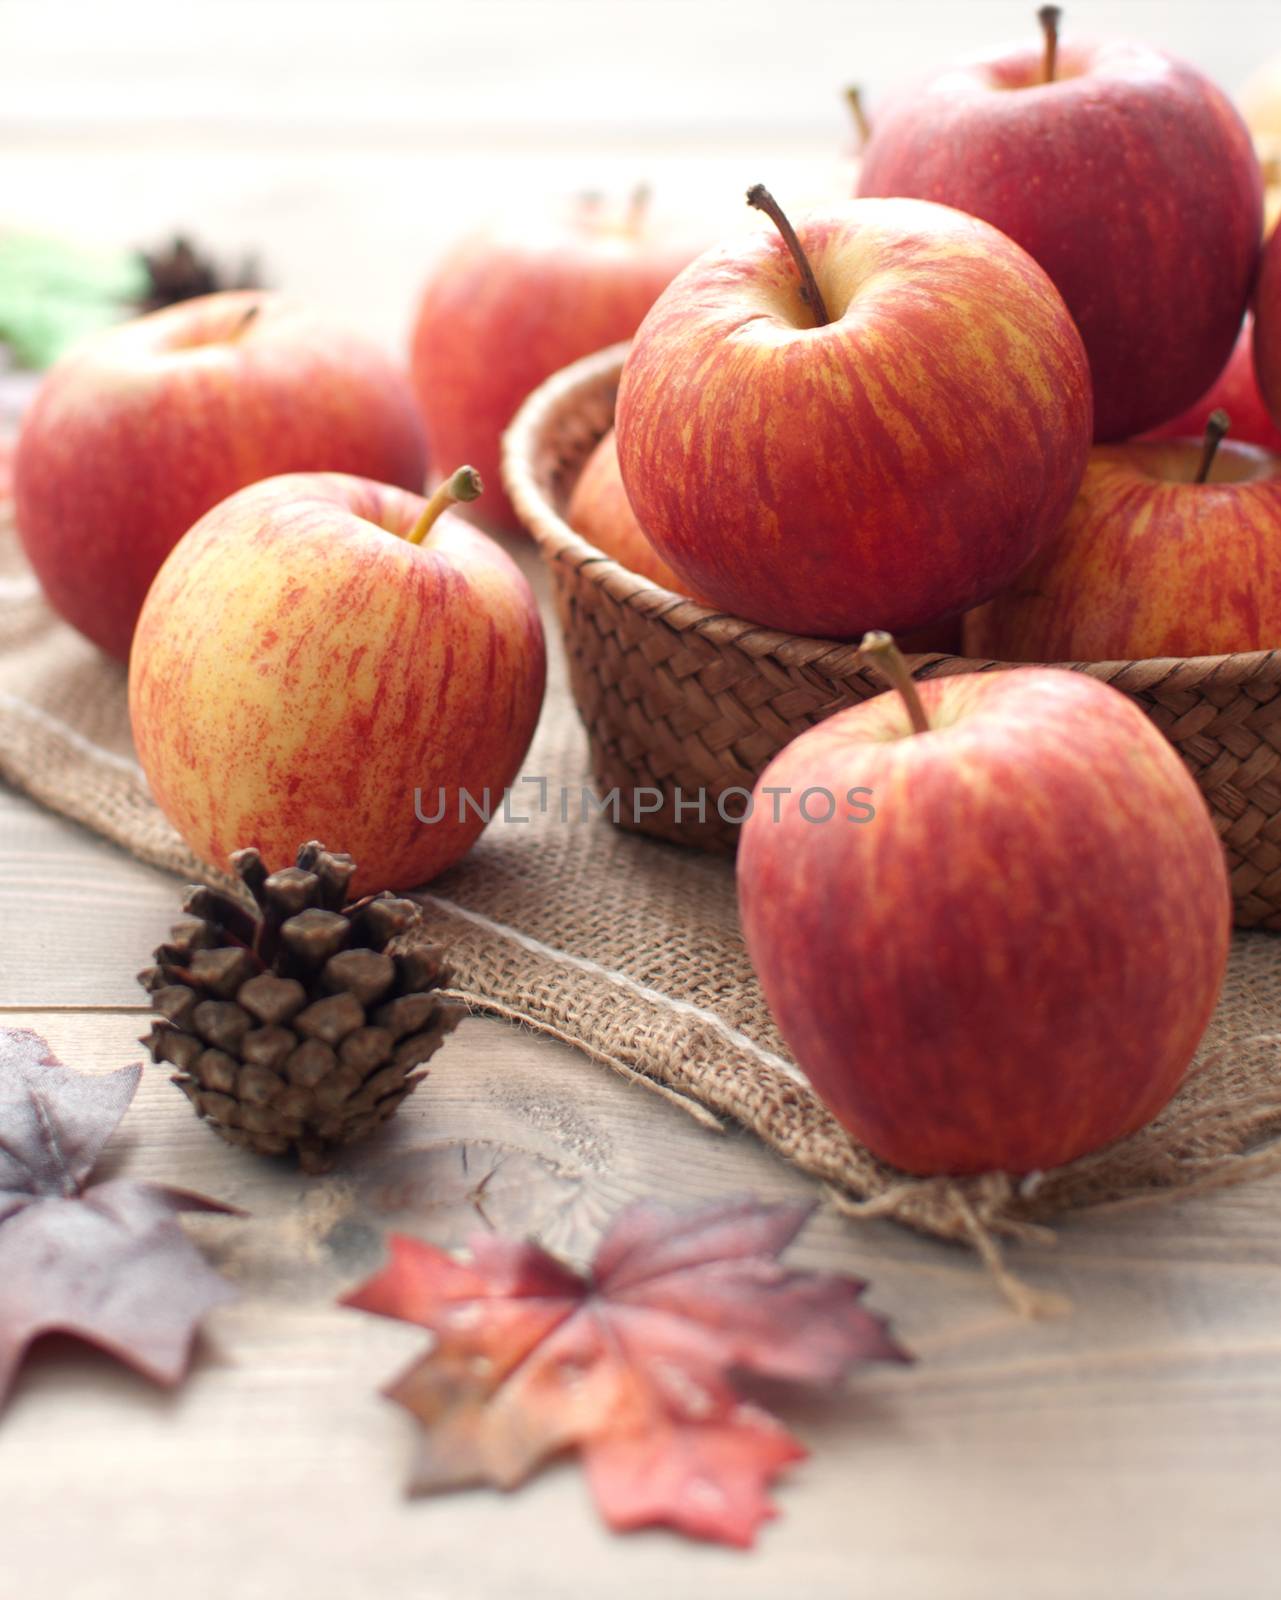 Autumn apples by unikpix